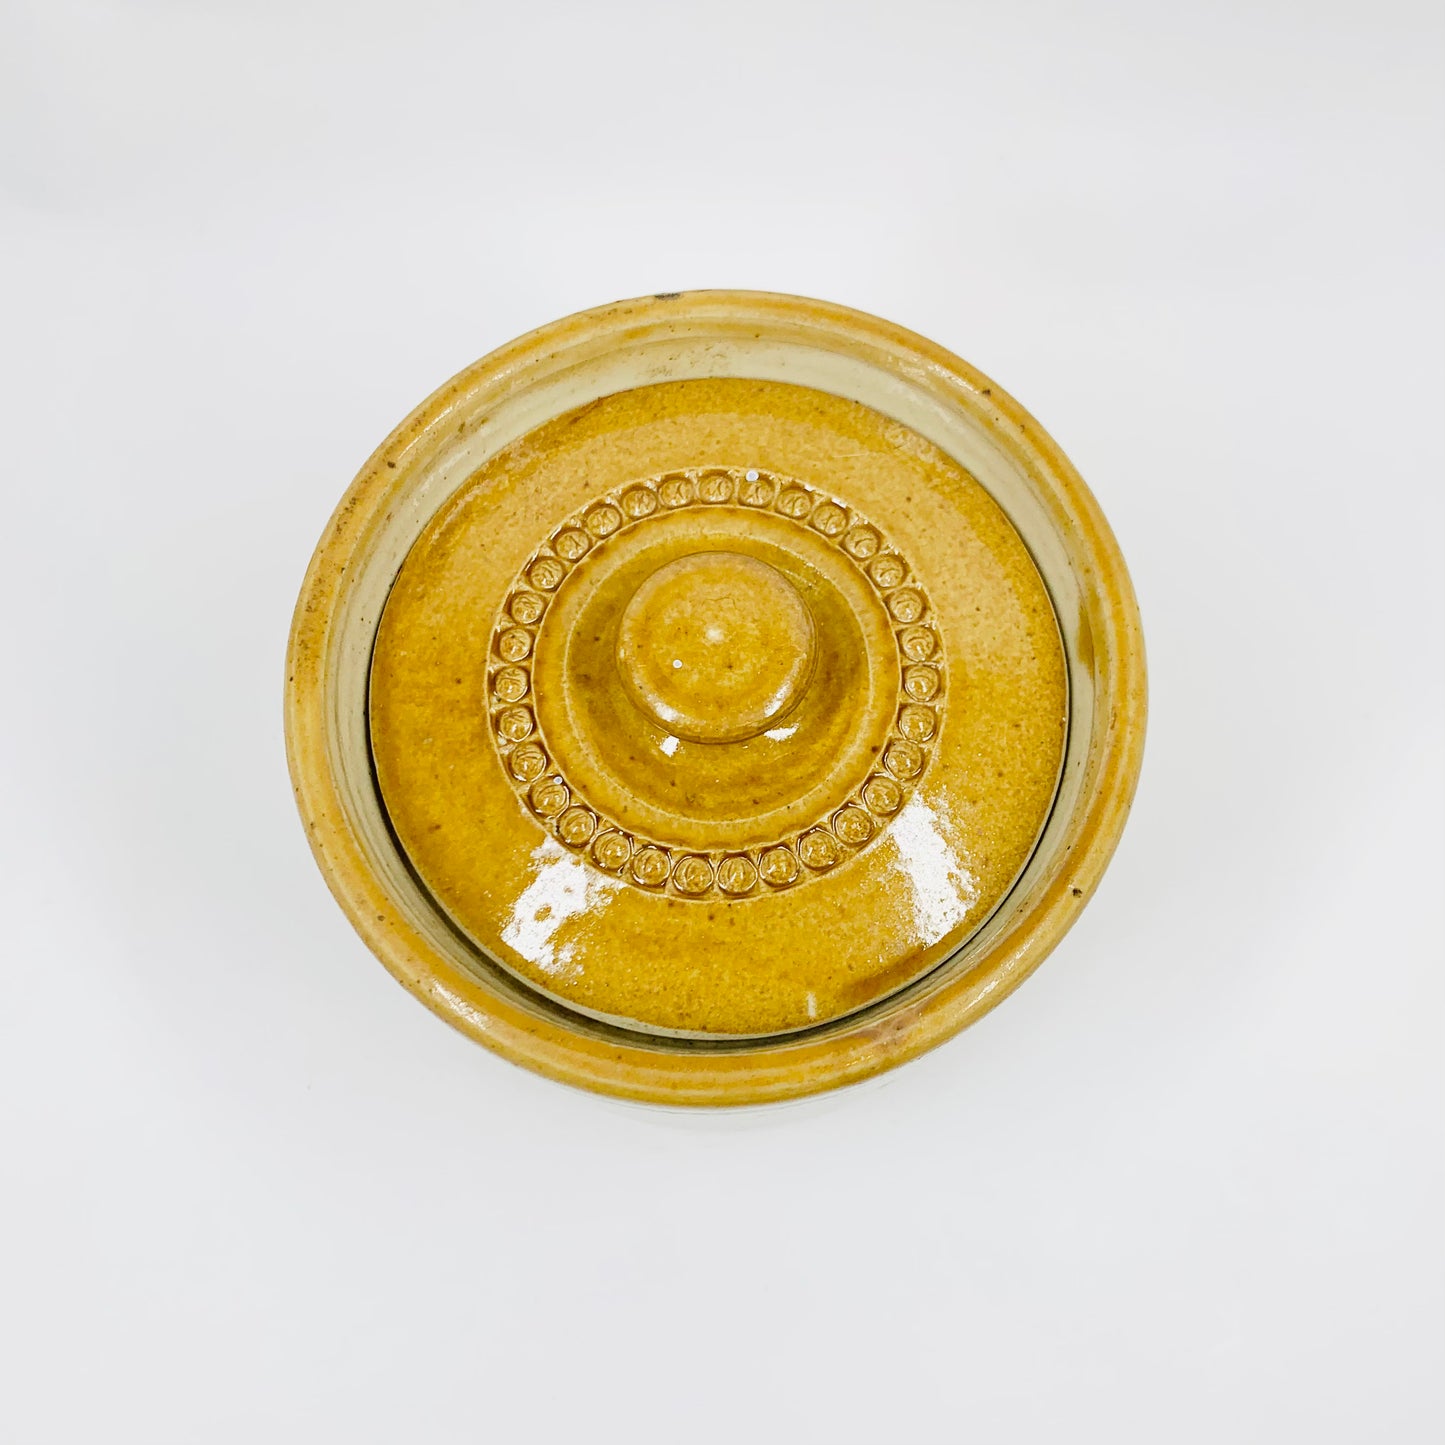 Midcentury hand glazed pottery canister/ginger jar